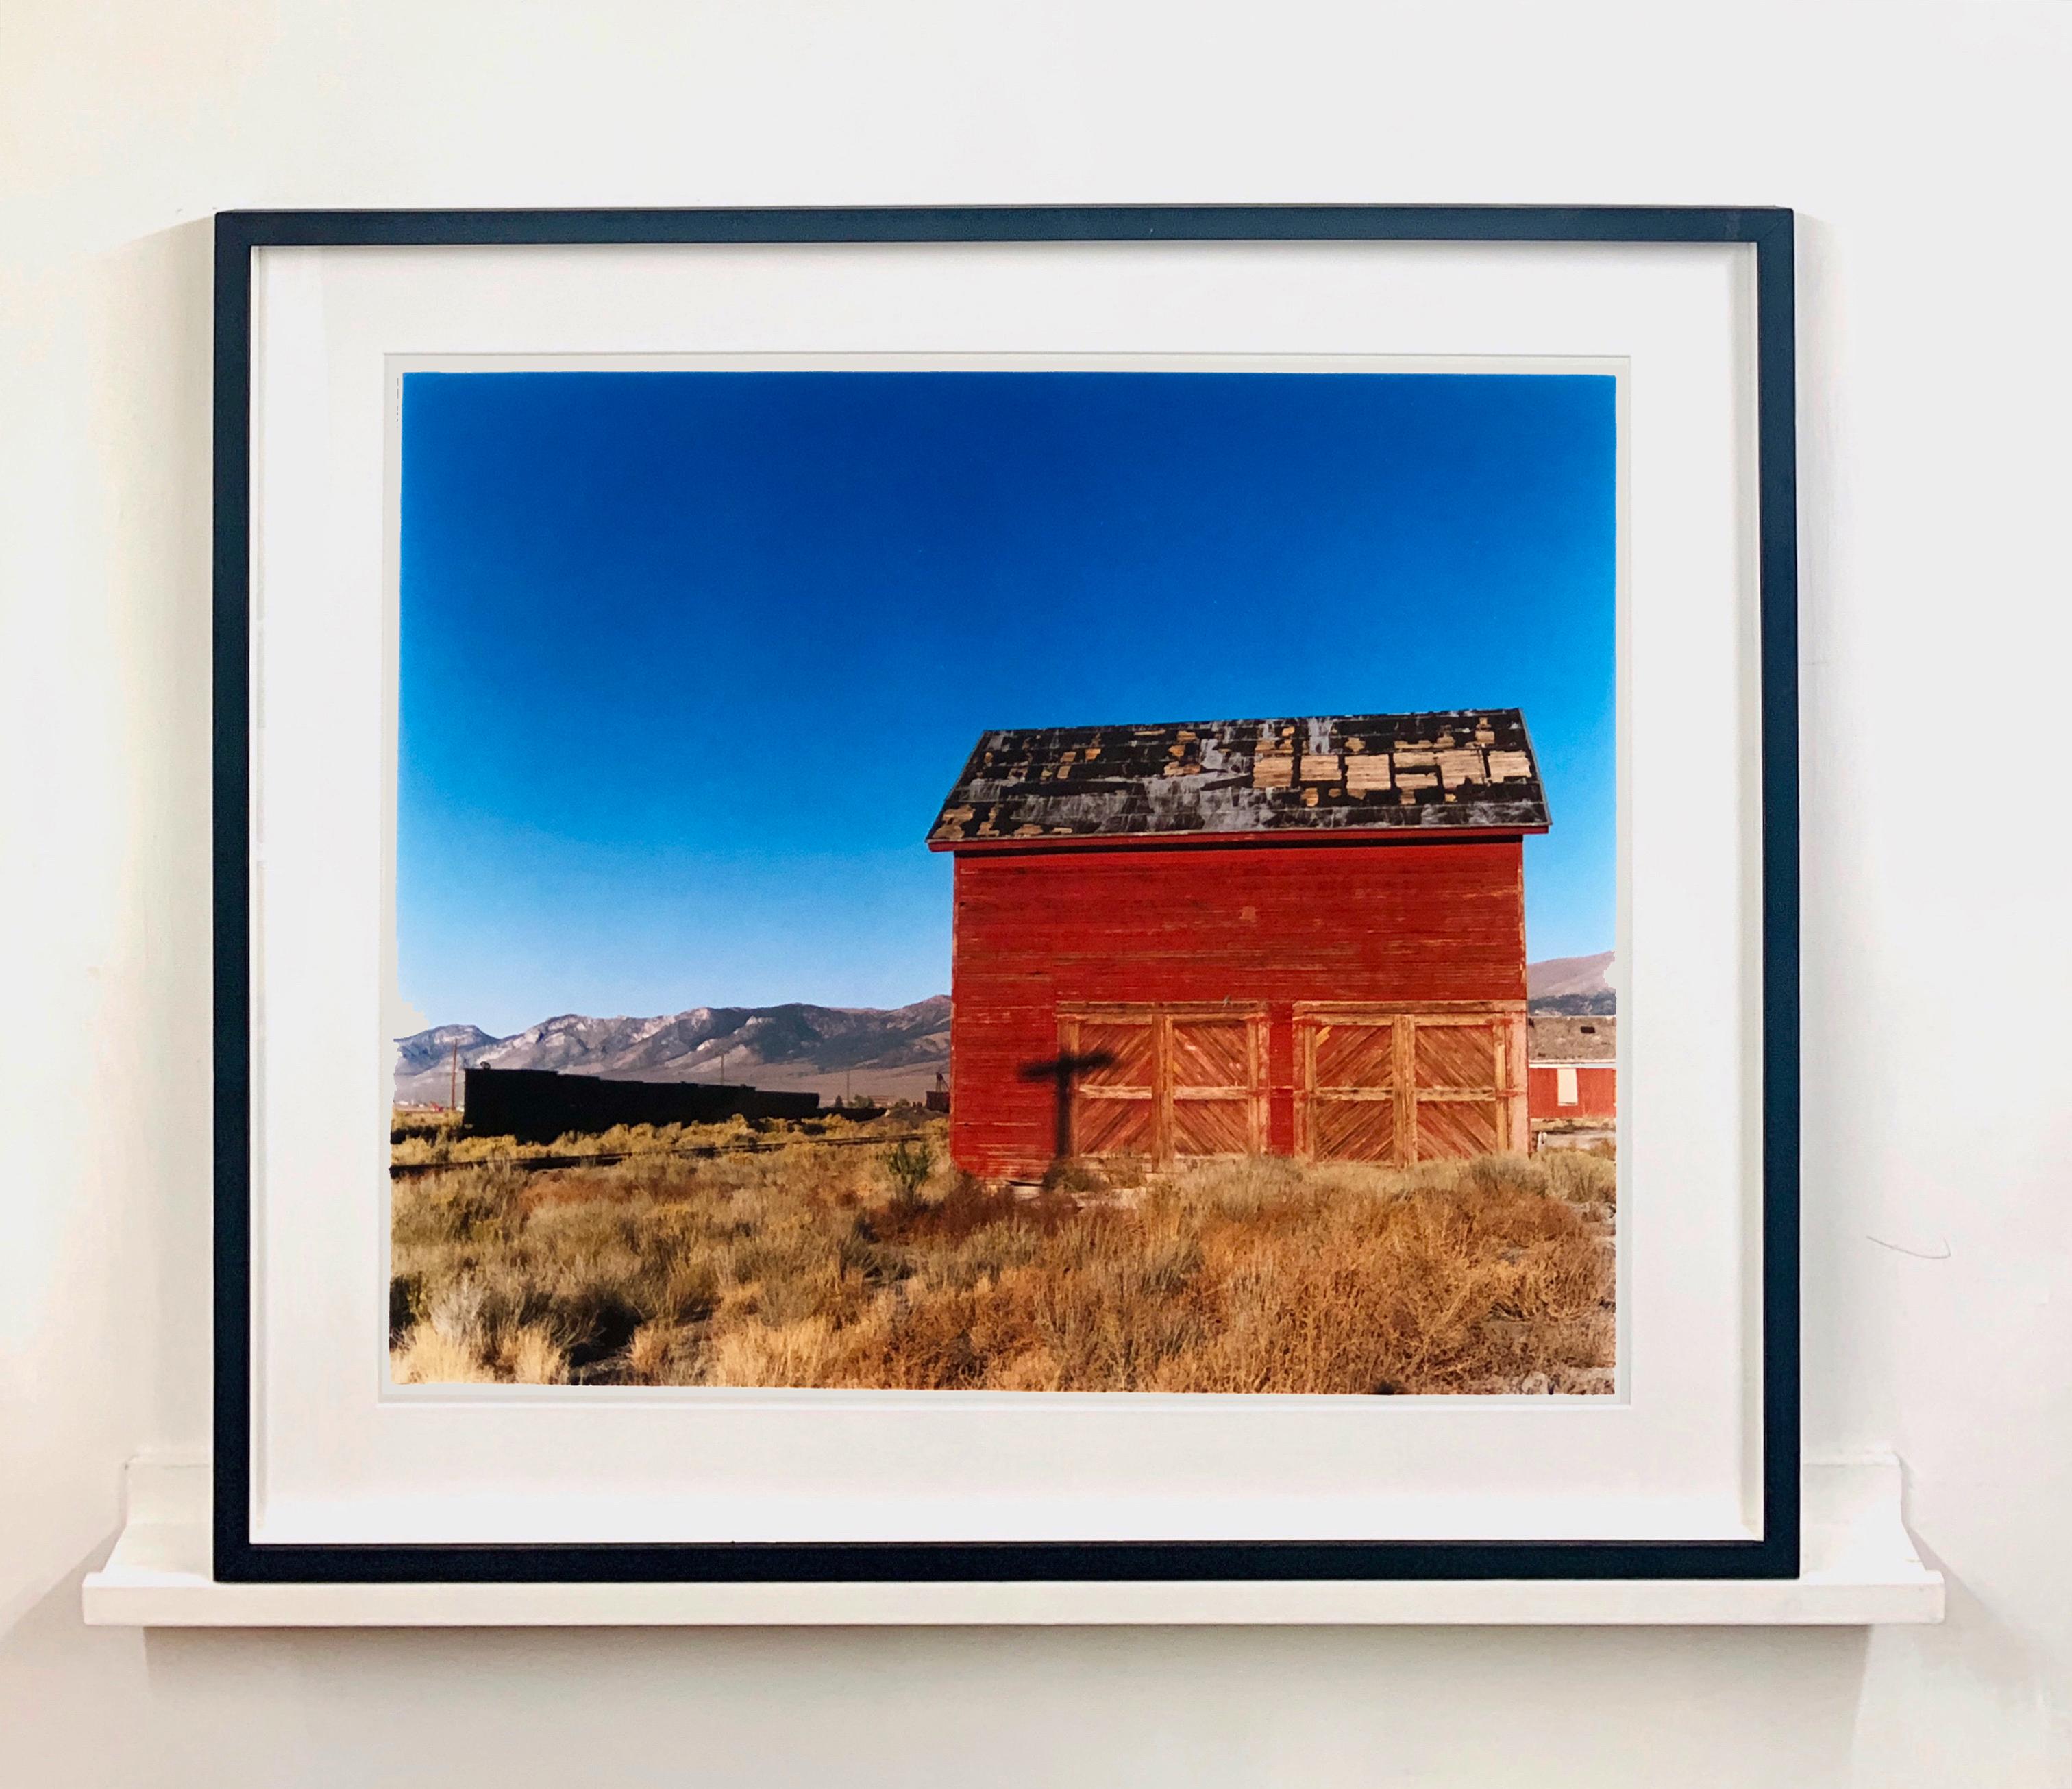 Shed - Railroad Depot, Nevada, 2003 - After the Gold Rush - Architecture Photo  - Violet Landscape Print par Richard Heeps